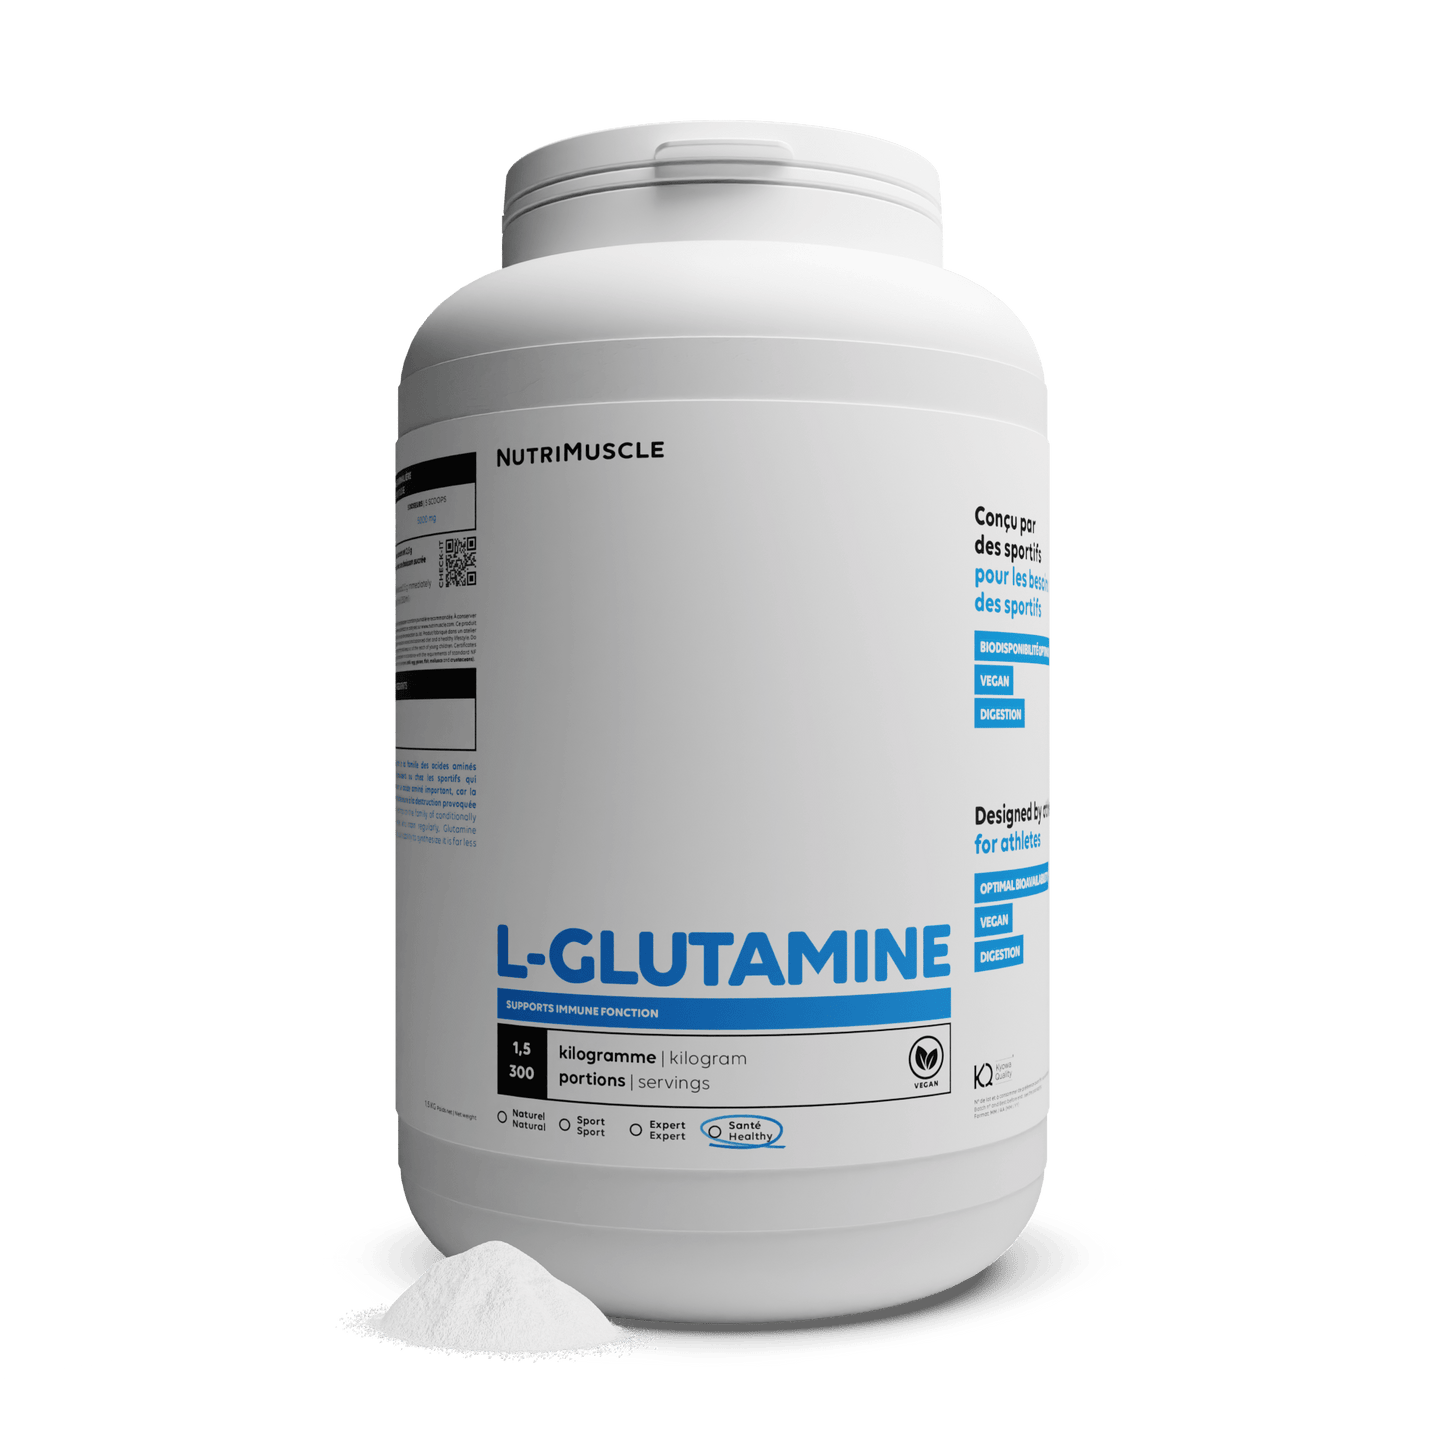 Nutrimuscle Acides aminés 1.50 kg Glutamine (L-Glutamine) en poudre